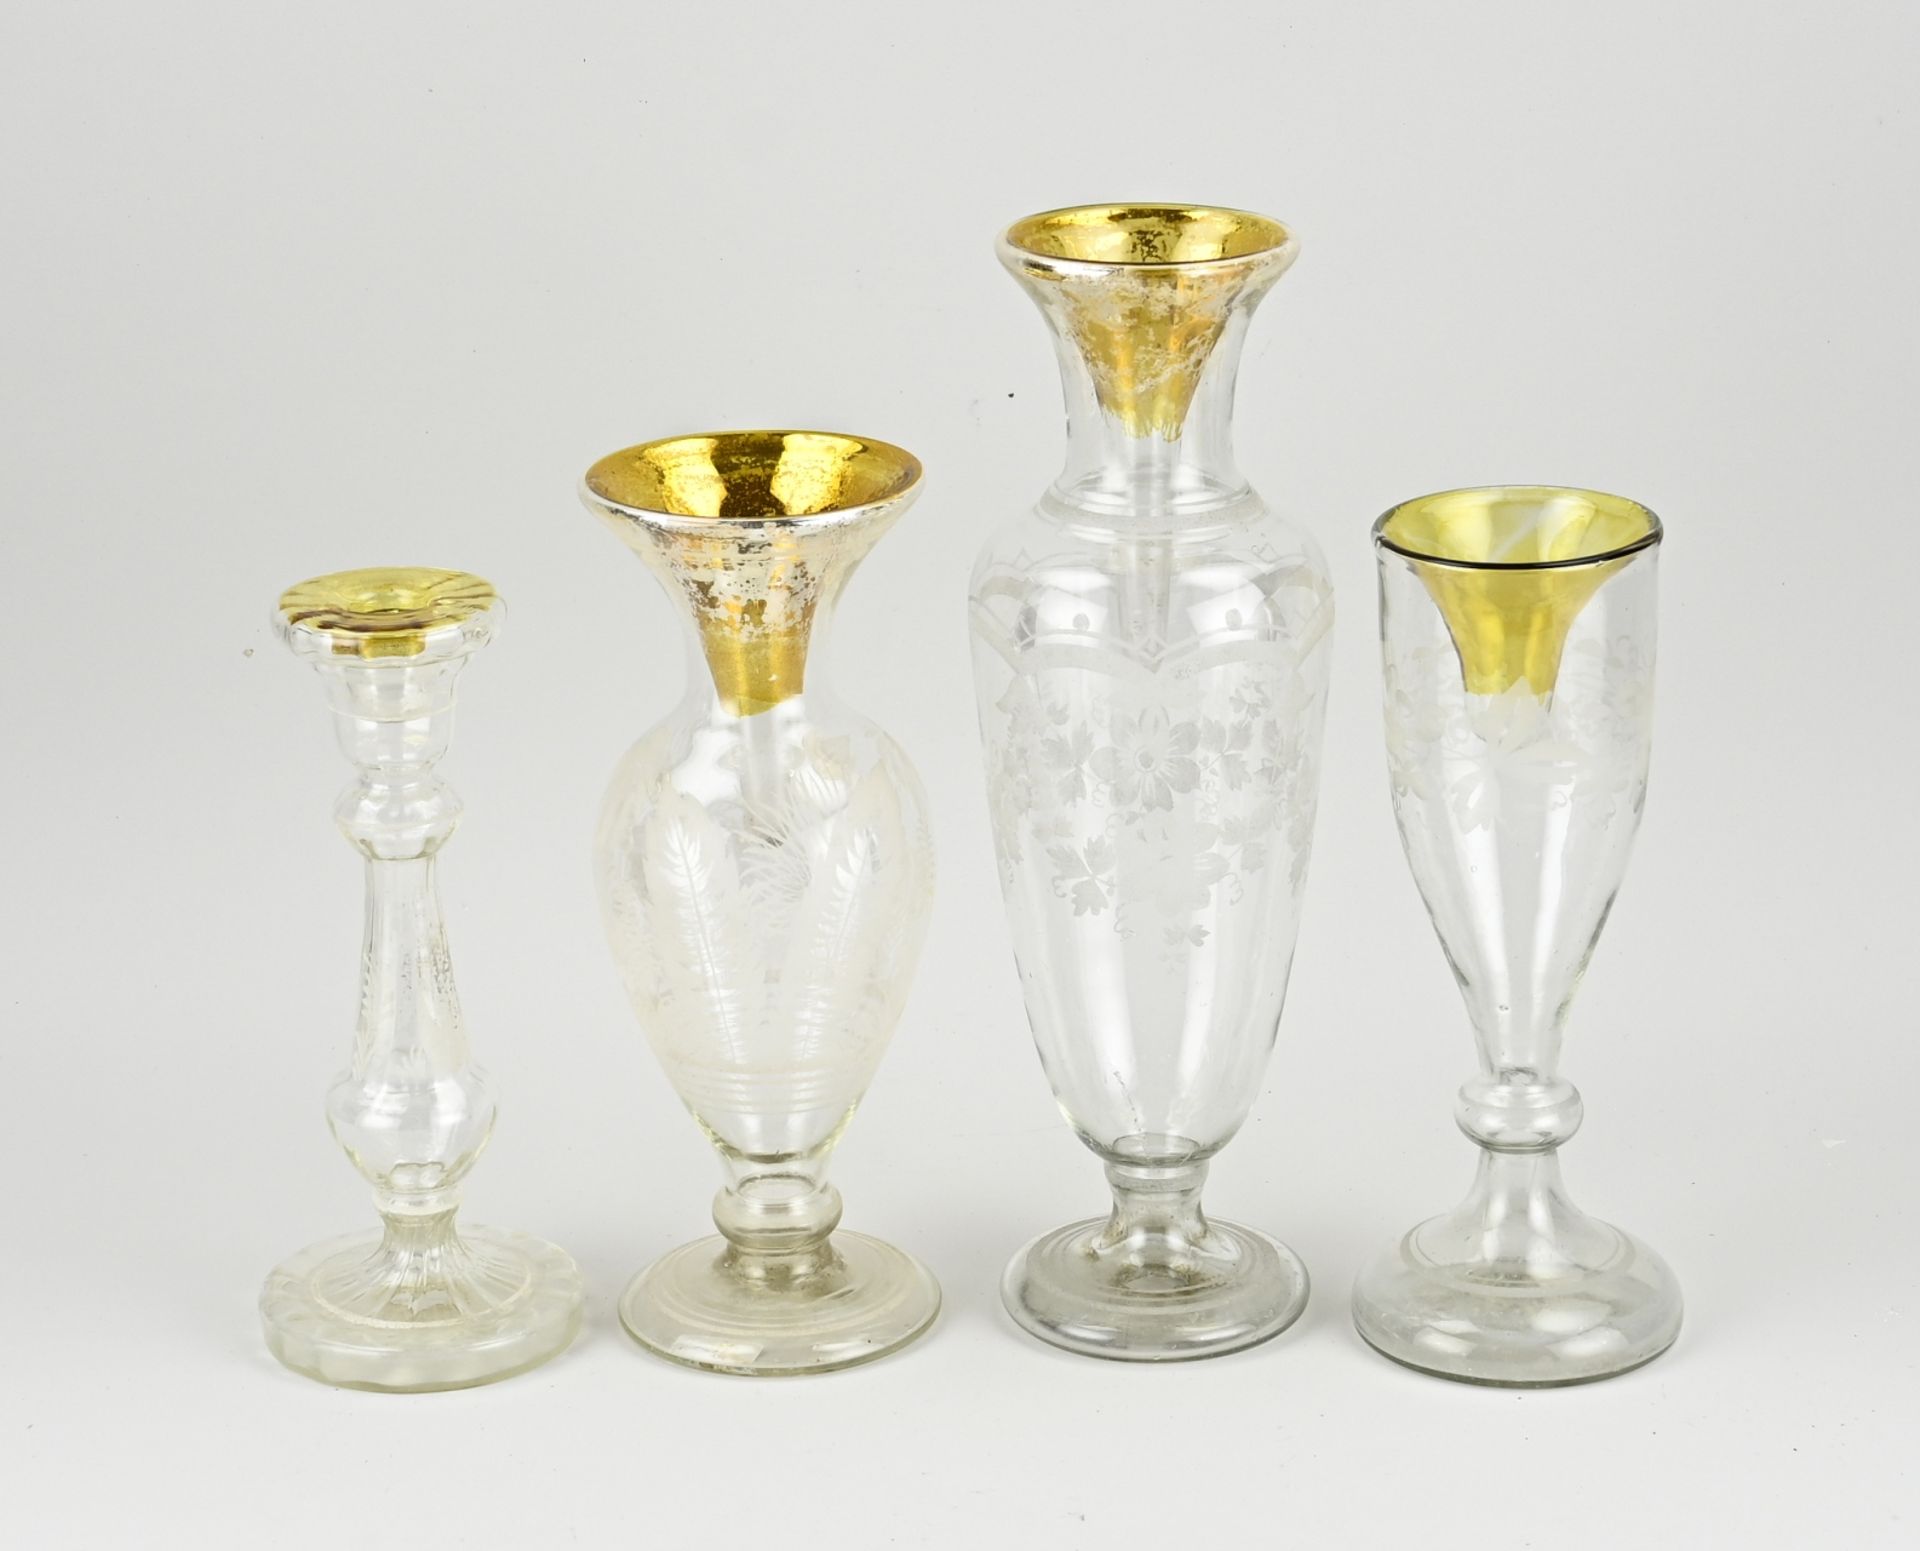 Lot 19th century glassware (4x)